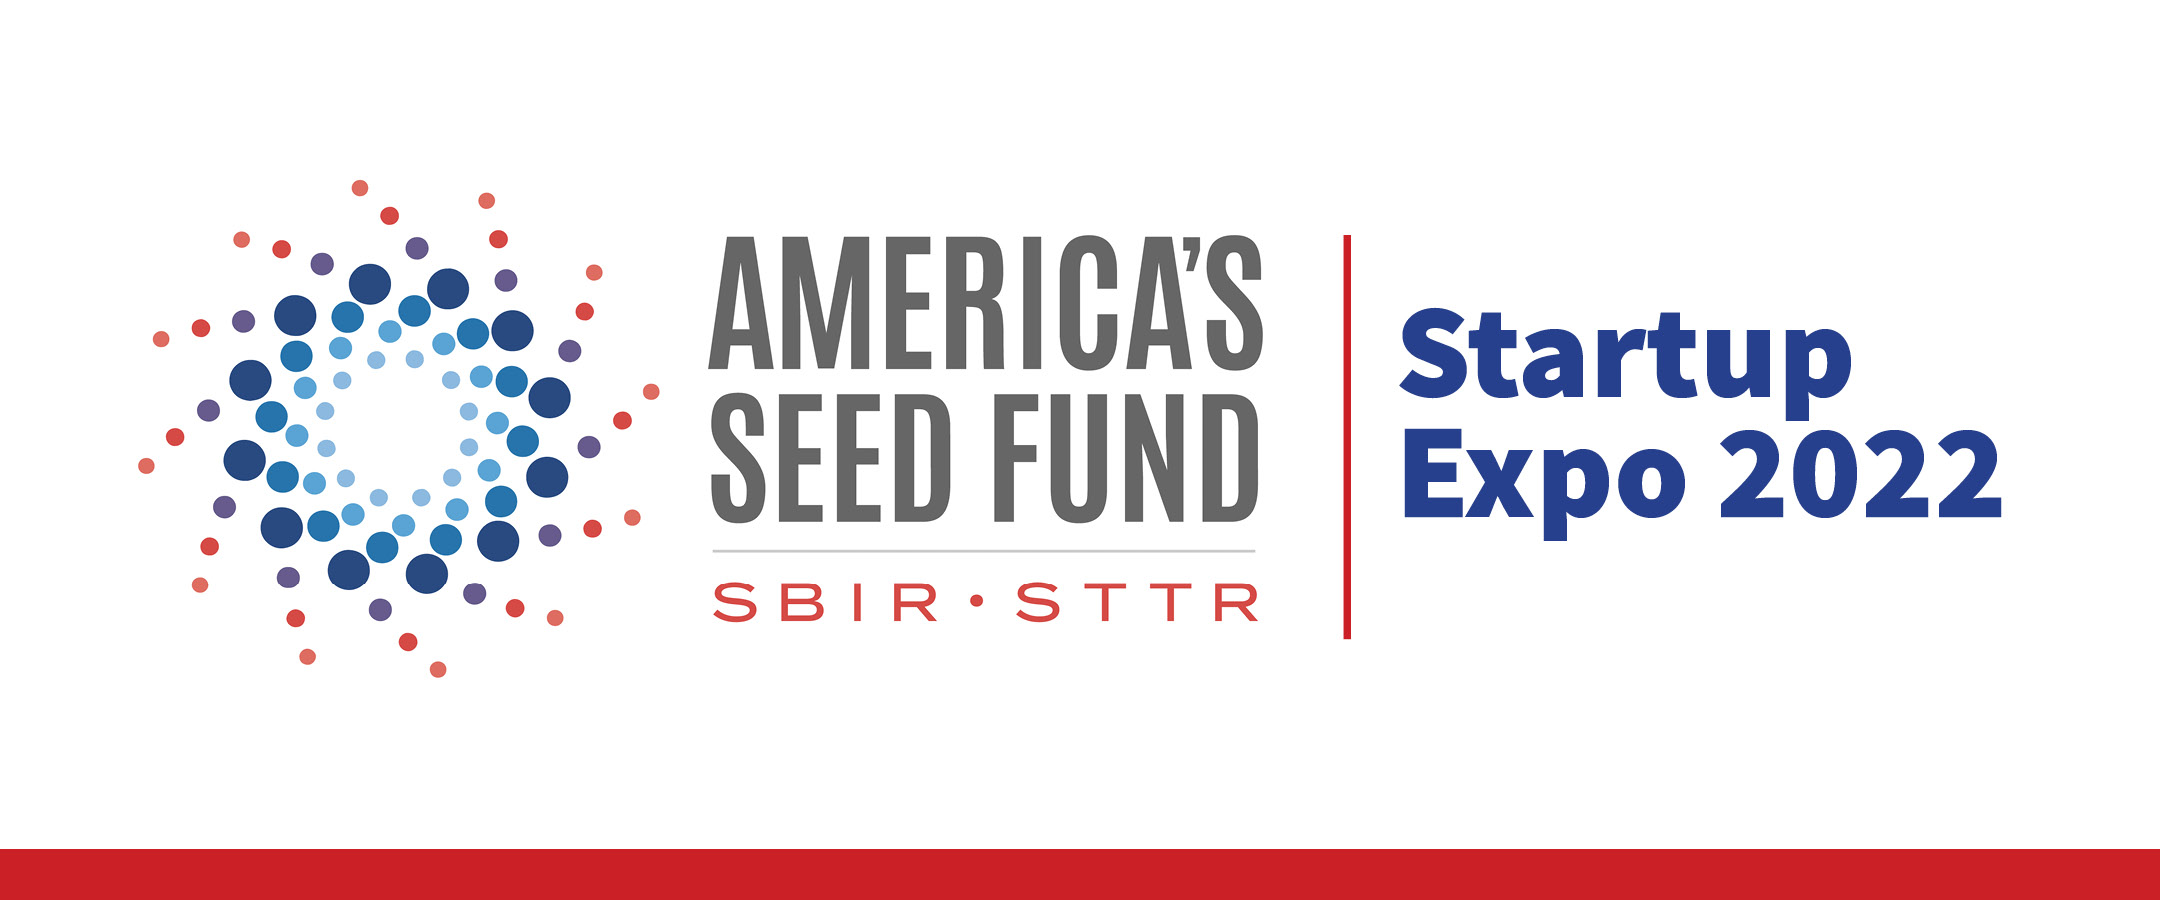 Upcoming America’s Seed Fund Startup Expo to feature three NOAA SBIR award winners